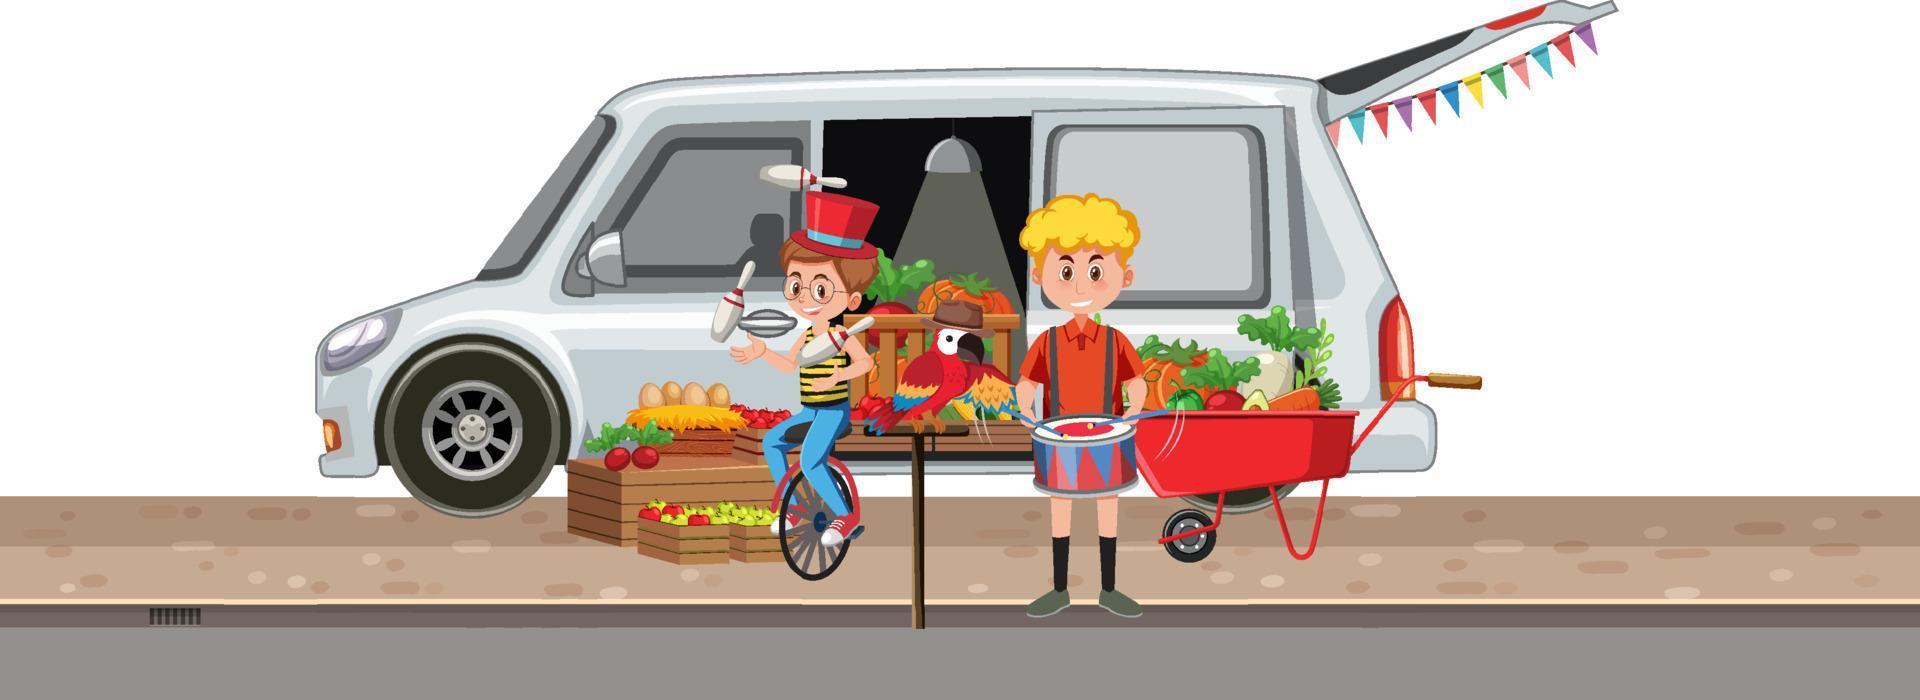 Scene with boys and vegetables van vector